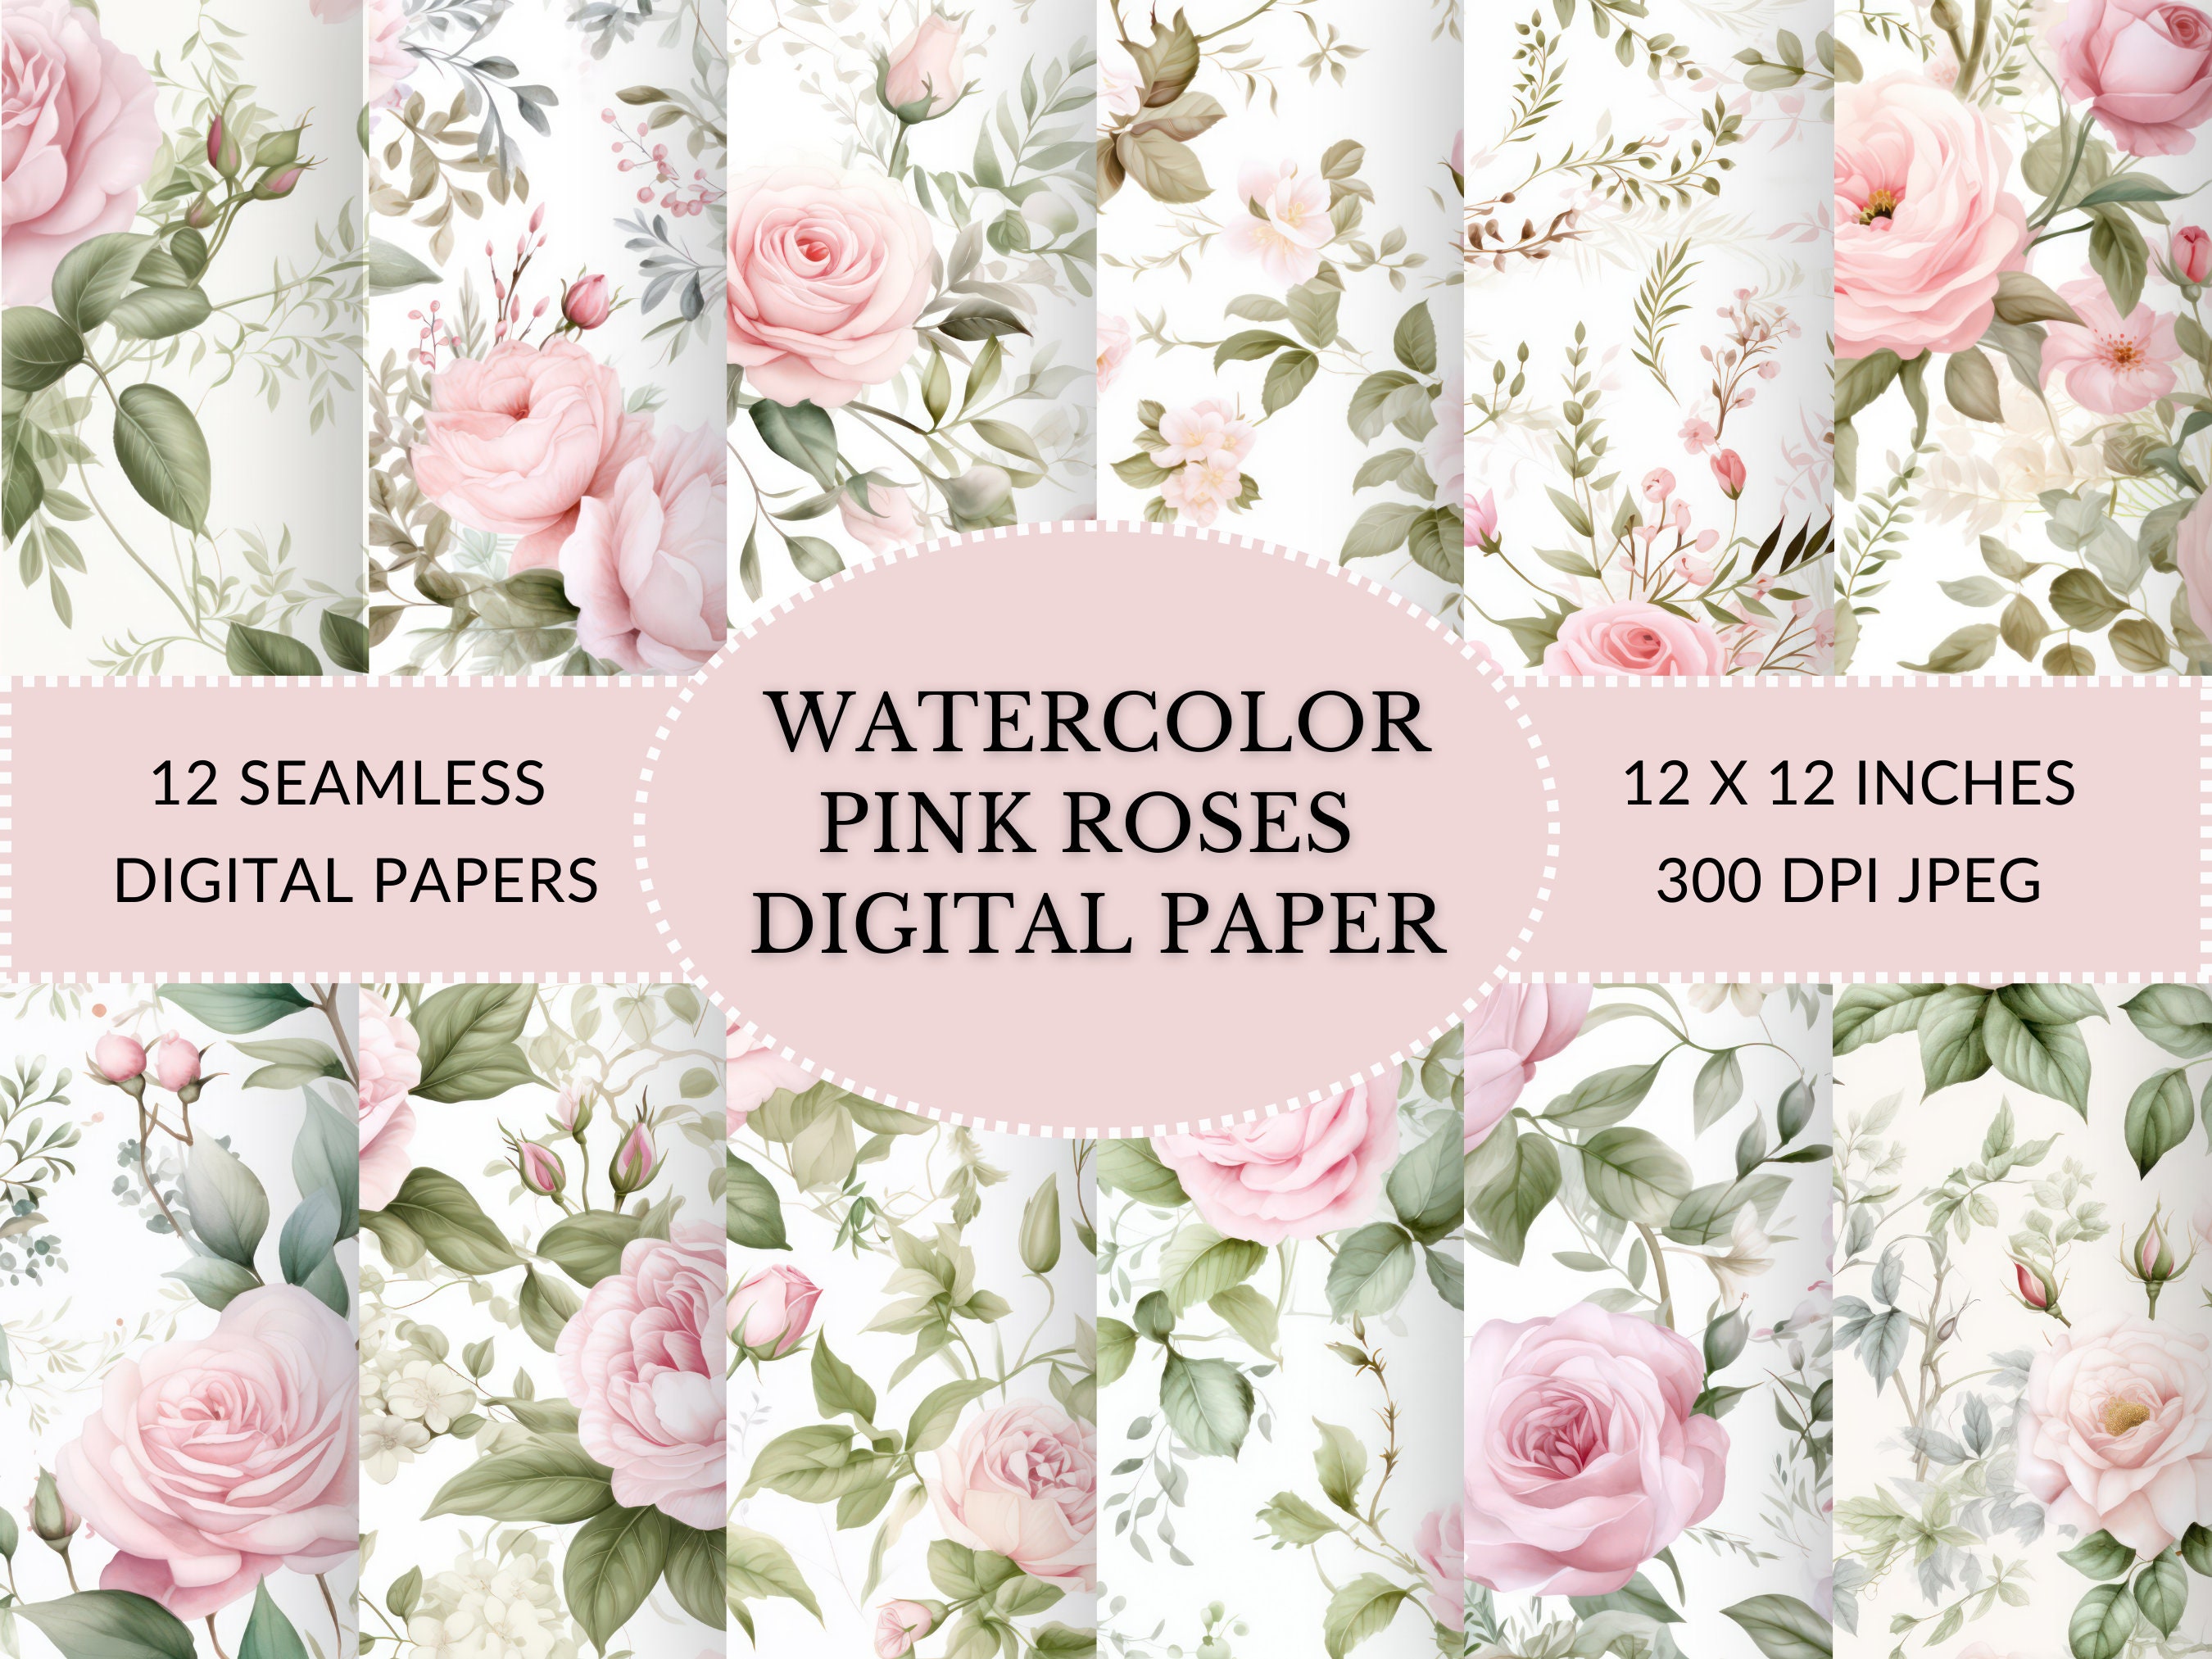 Light Pink Digital Paper, pattern Scrapbook Pack, printable mixed